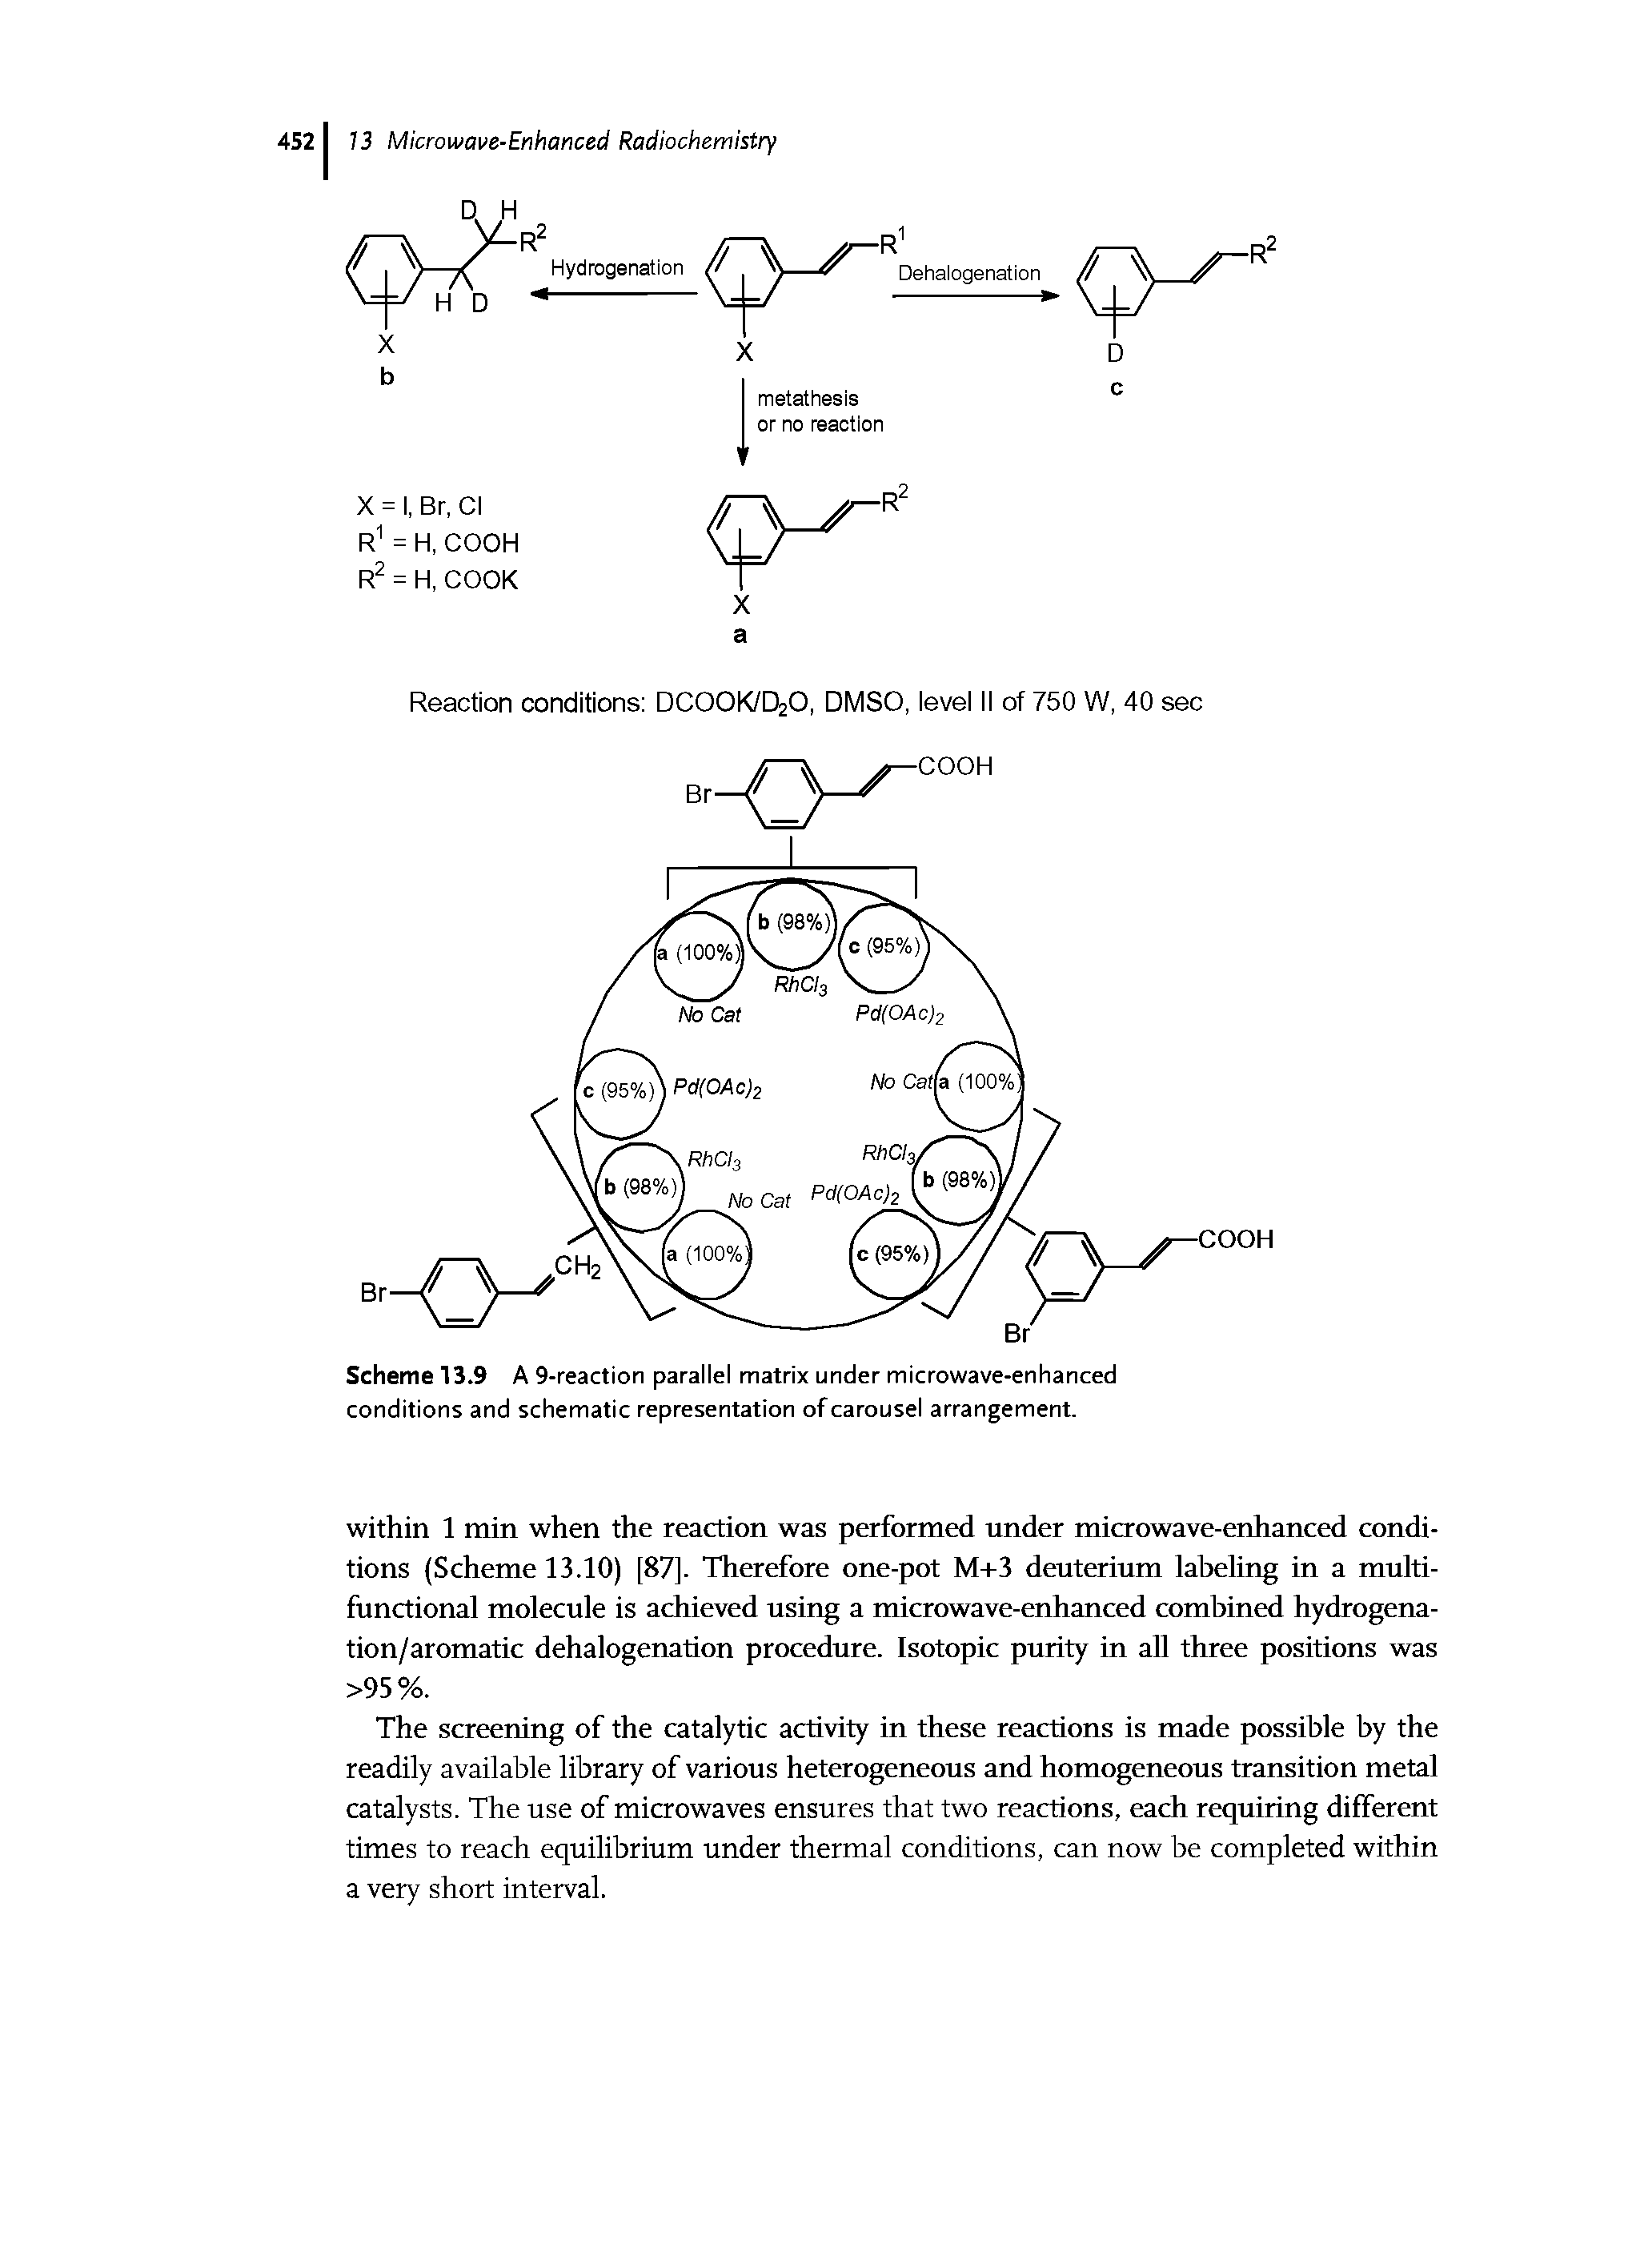 Scheme 13.9 A 9-reaction parallel matrix under microwave-enhanced conditions and schematic representation of carousel arrangement.